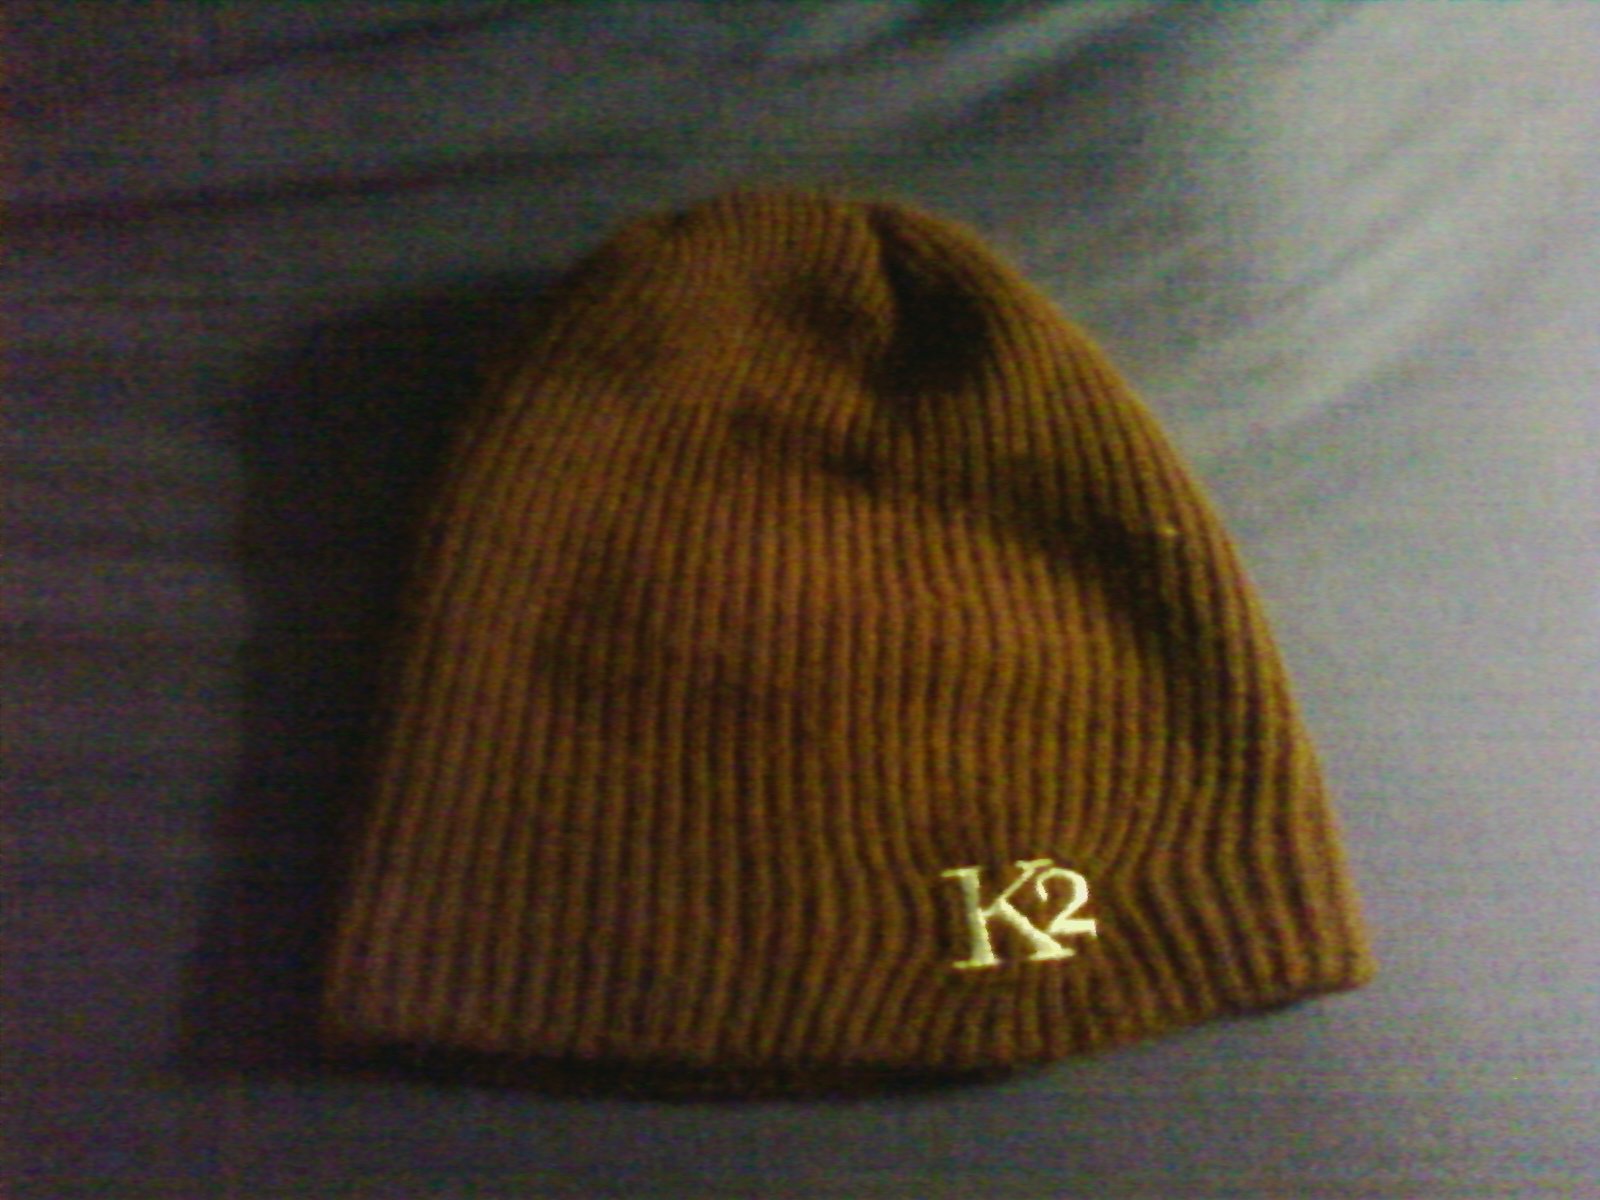 K2 hat